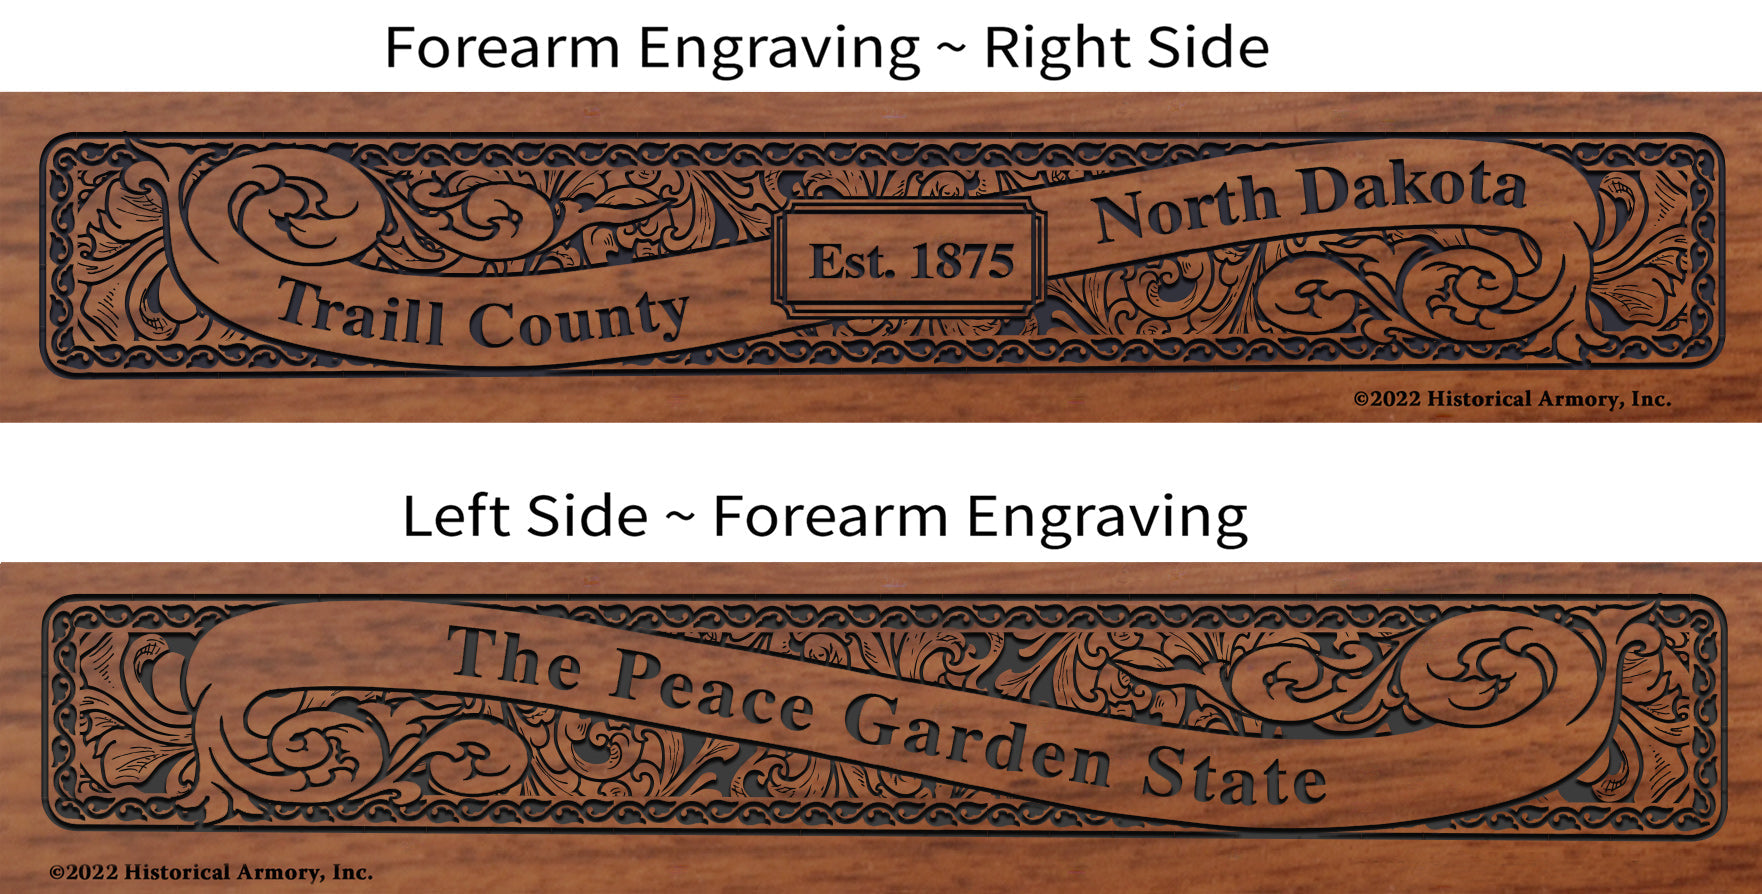 Traill County North Dakota Engraved Rifle Forearm